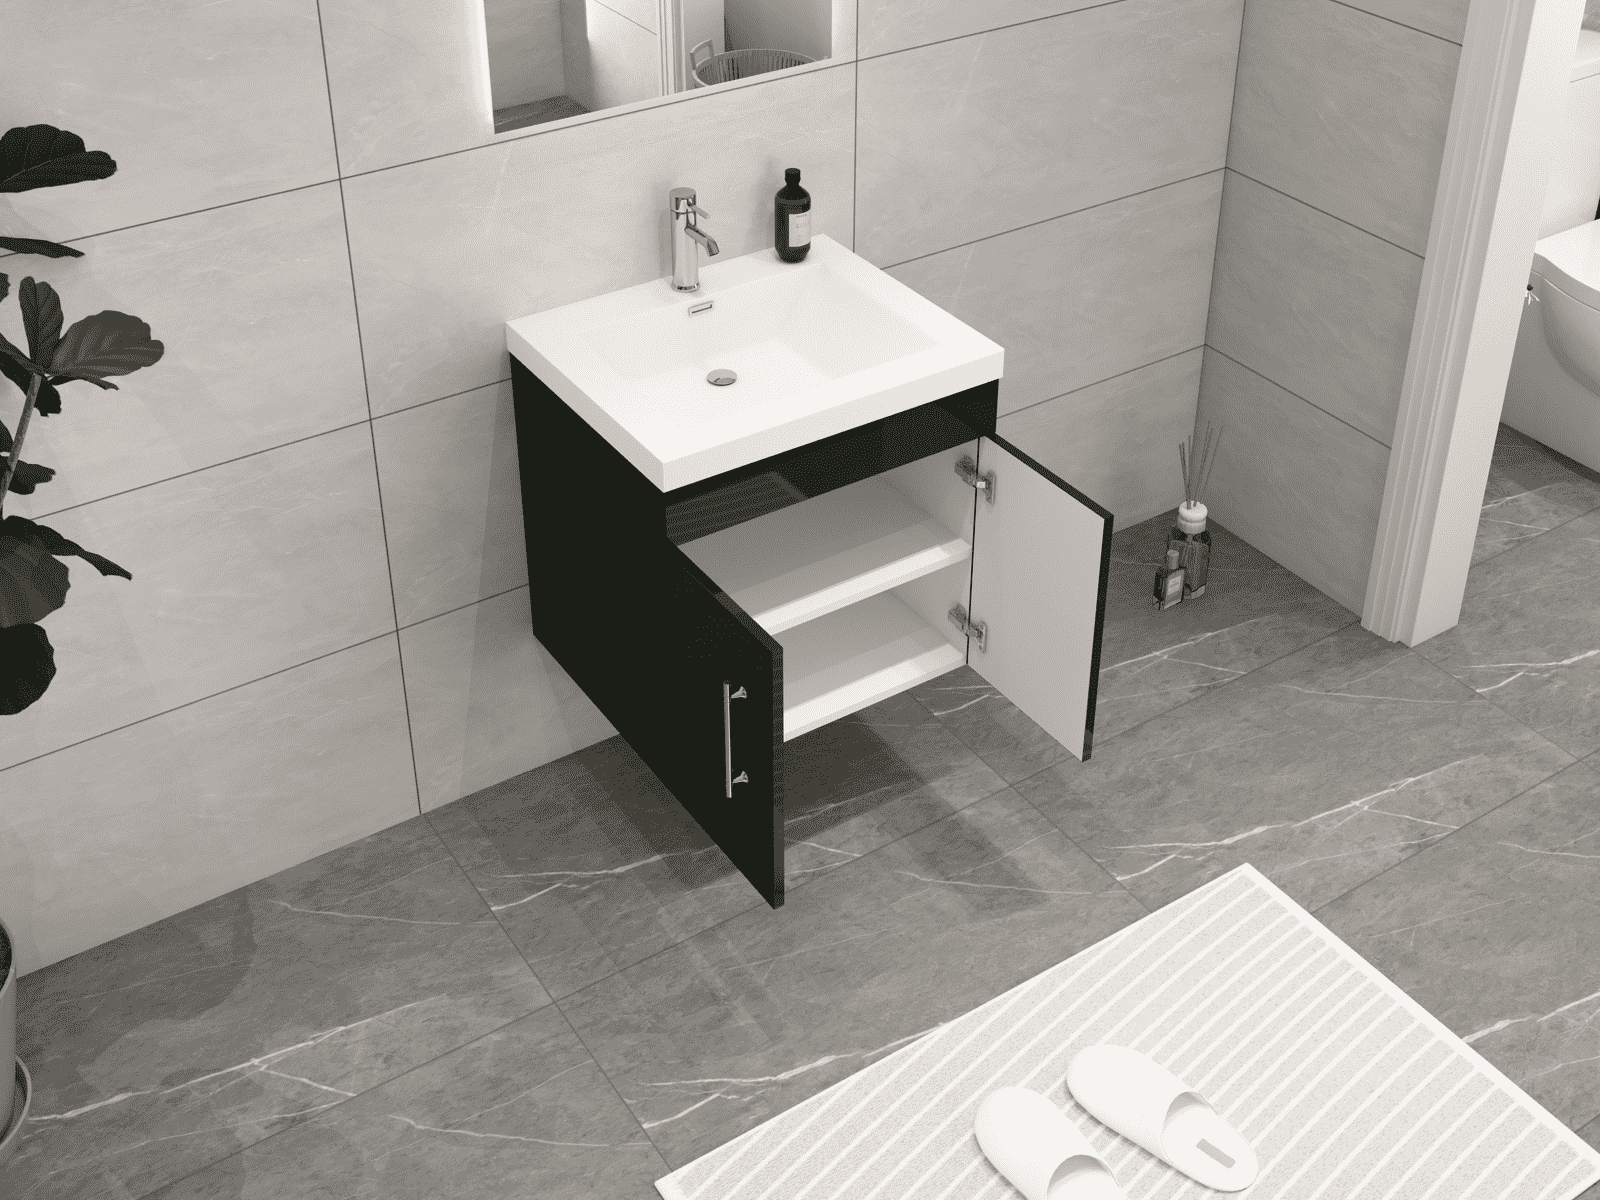 Elsa 24" Wall-Mounted Floating Bathroom Vanity with Reinforced Acrylic Sink in Gloss Black | Better Vanity